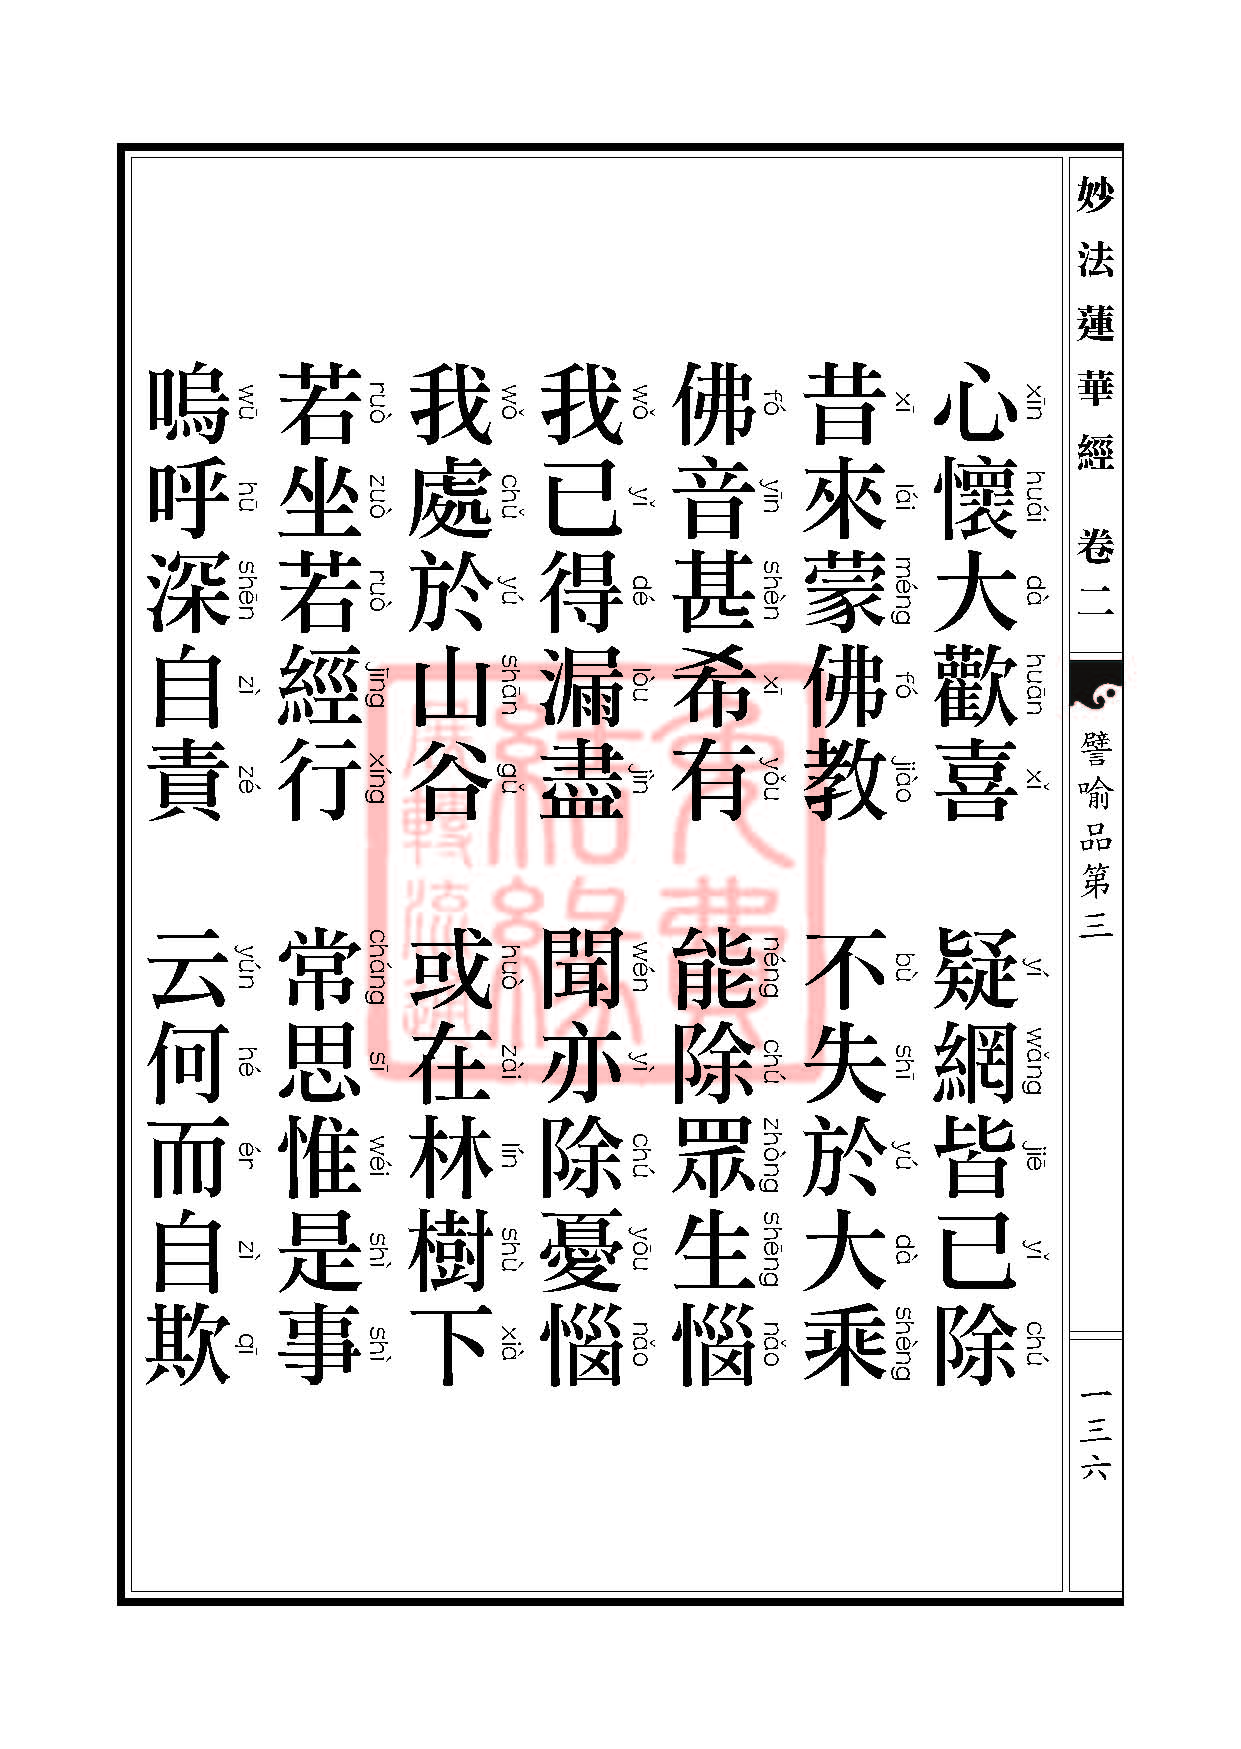 Book_FHJ_HK-A6-PY_Web_ҳ_136.jpg